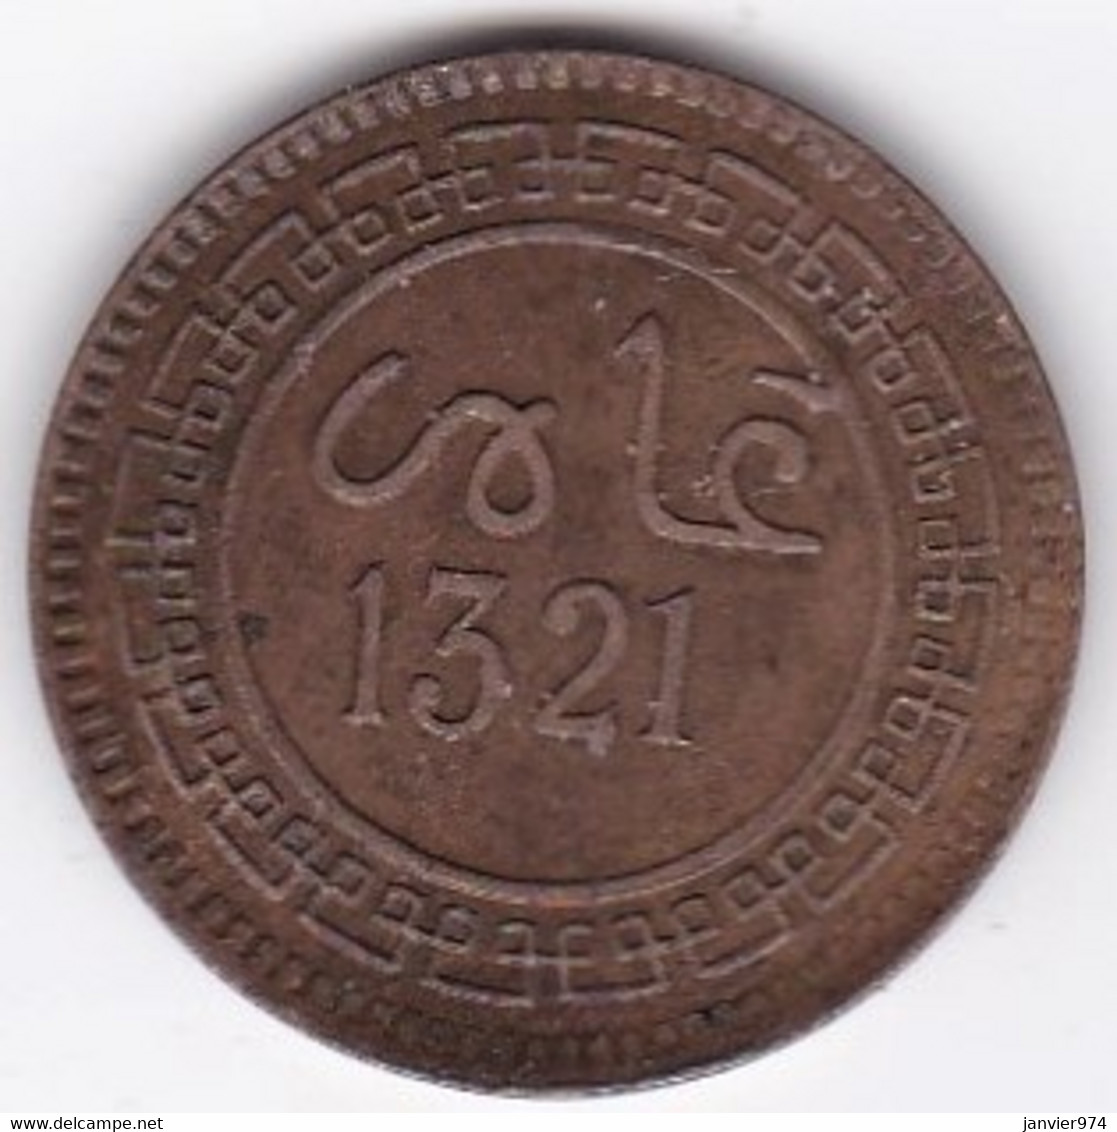 Maroc. 5 Mazunas (Mouzounas) HA 1321 (1903) Birmingham. Abdul Aziz I. Frappe Médaille. Bronze. - Maroc